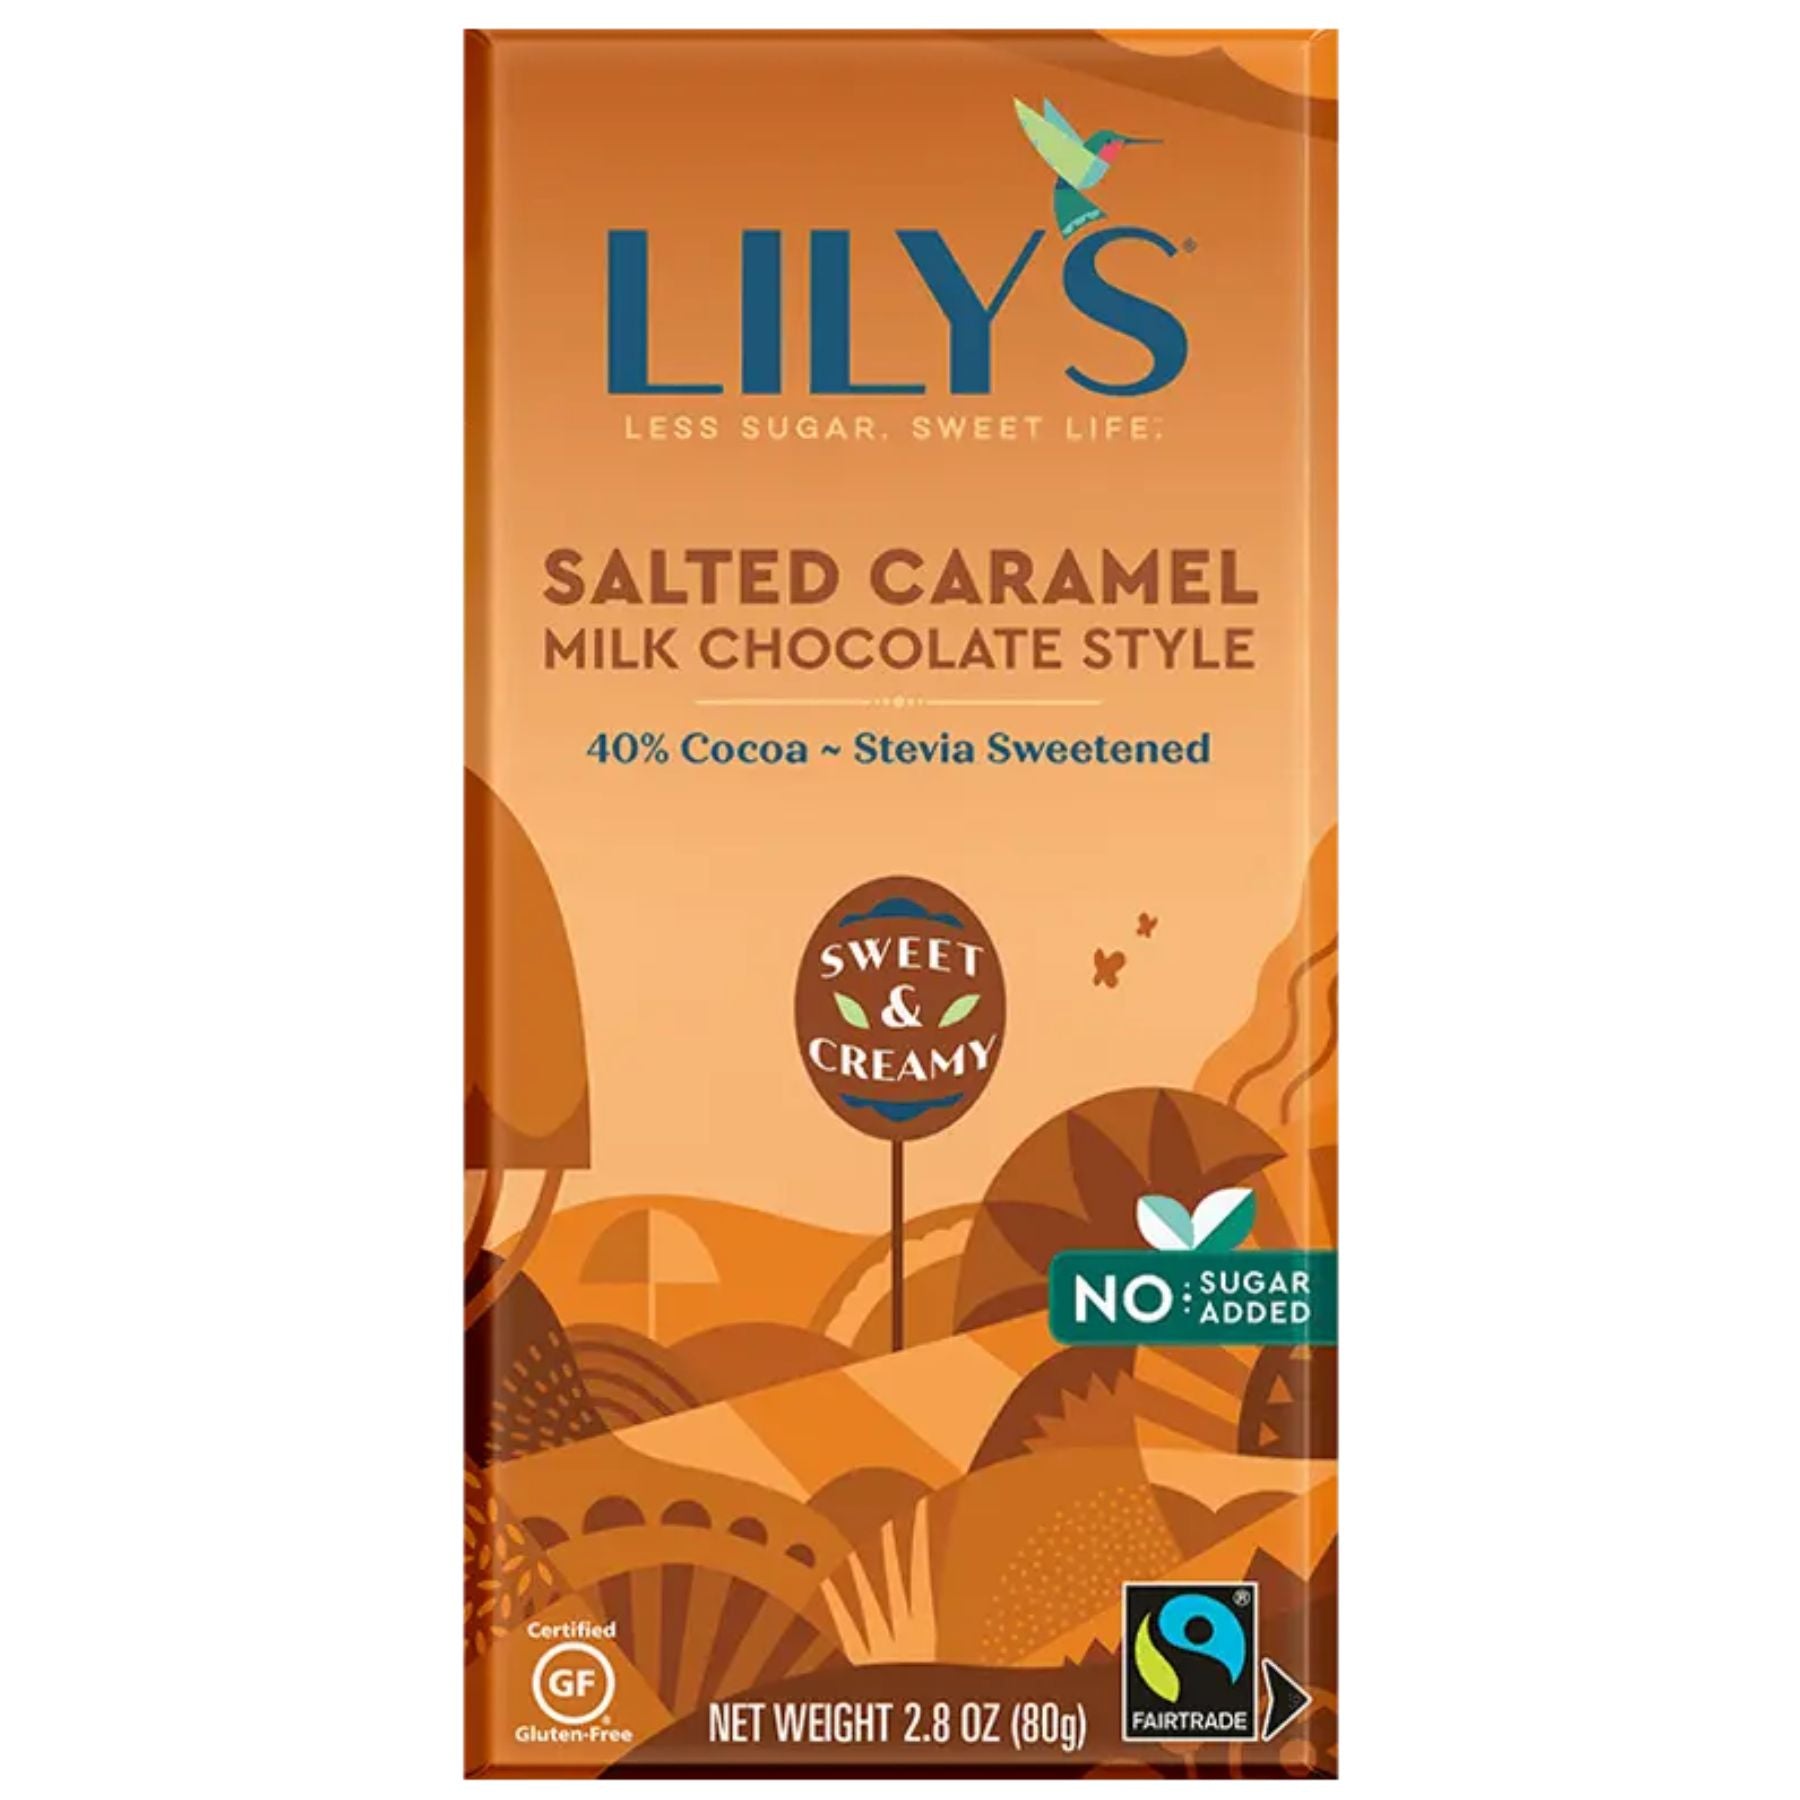 Lilys Salted Caramel Milk Chocolate 80g